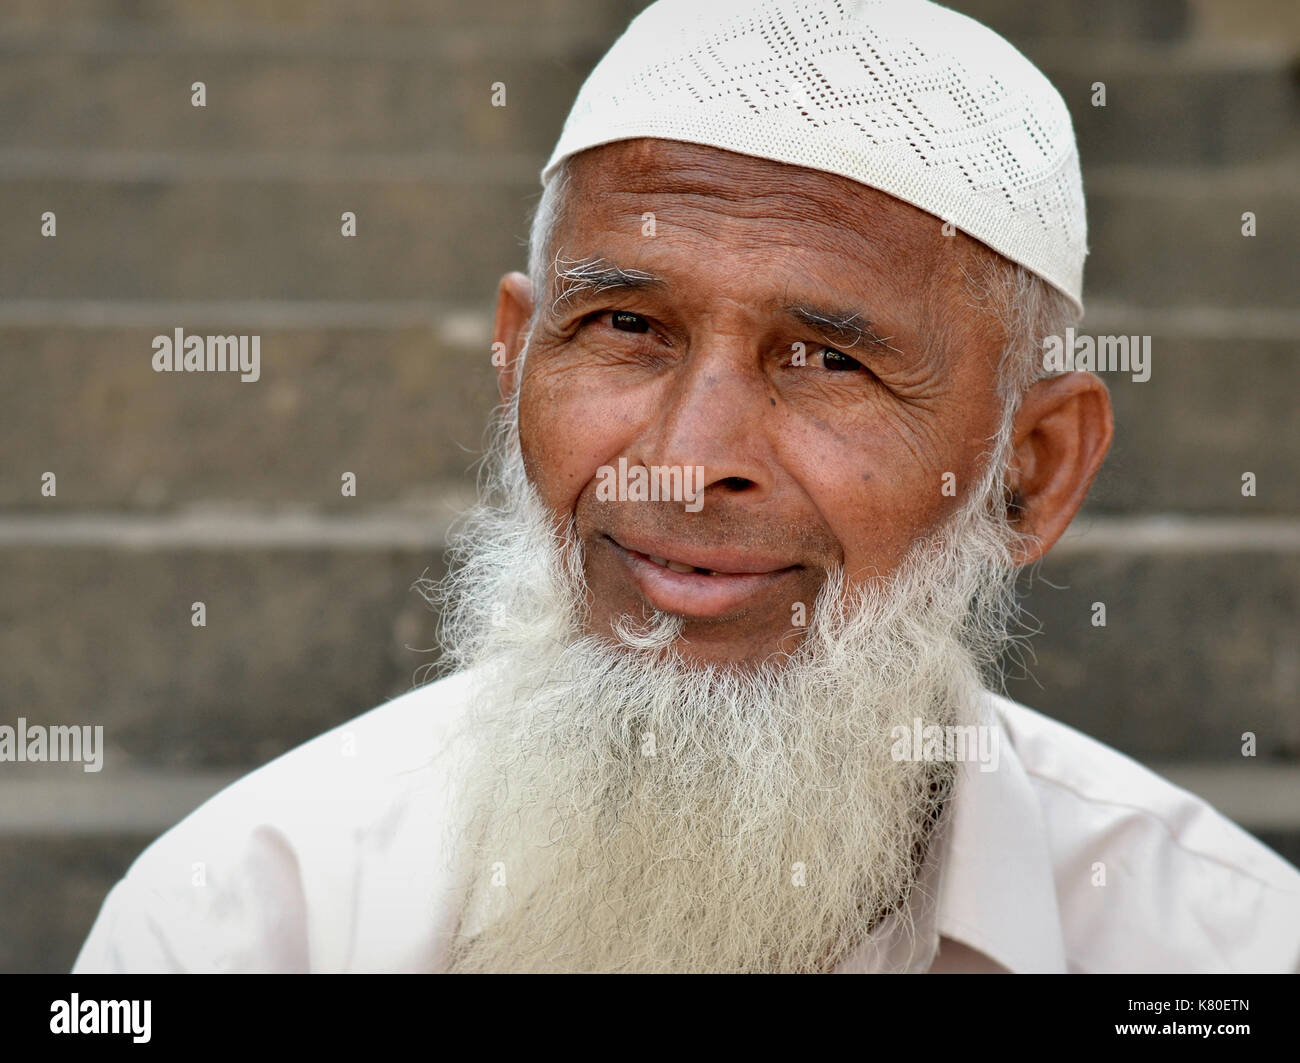 Elderly Indian Muslim man with Islamic beard wearing a white prayer cap (taqiyah) and poses for the camera. Stock Photo